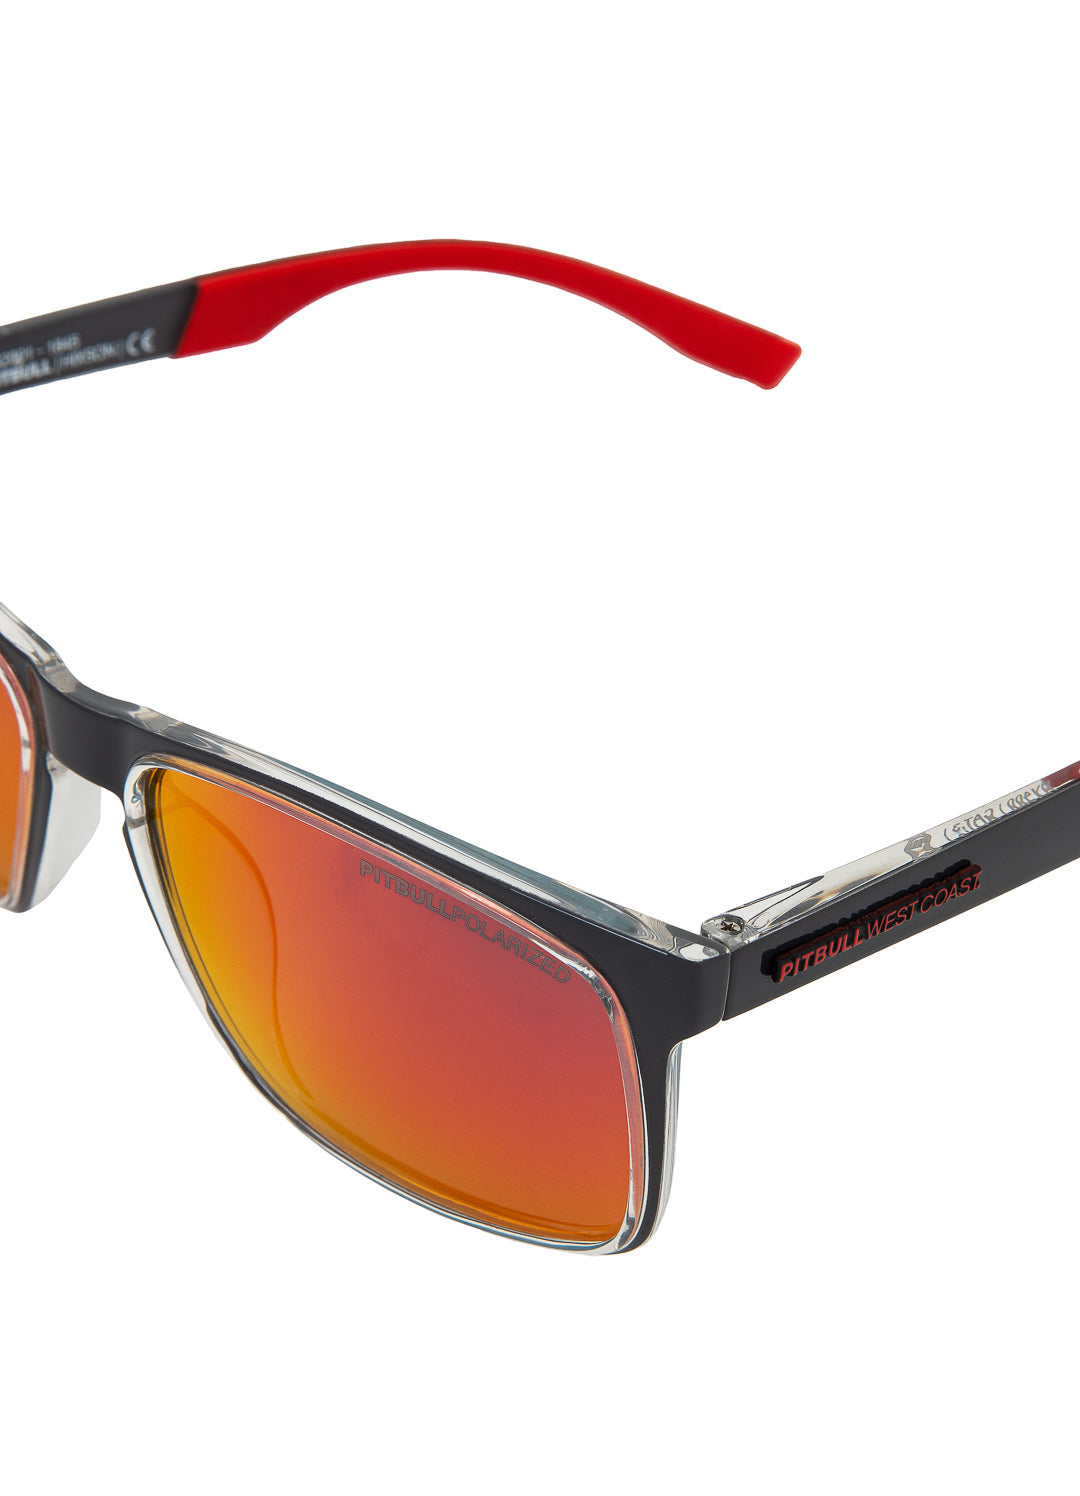 Sunglasses HIXSON Grey/Red - Pitbull West Coast International Store 